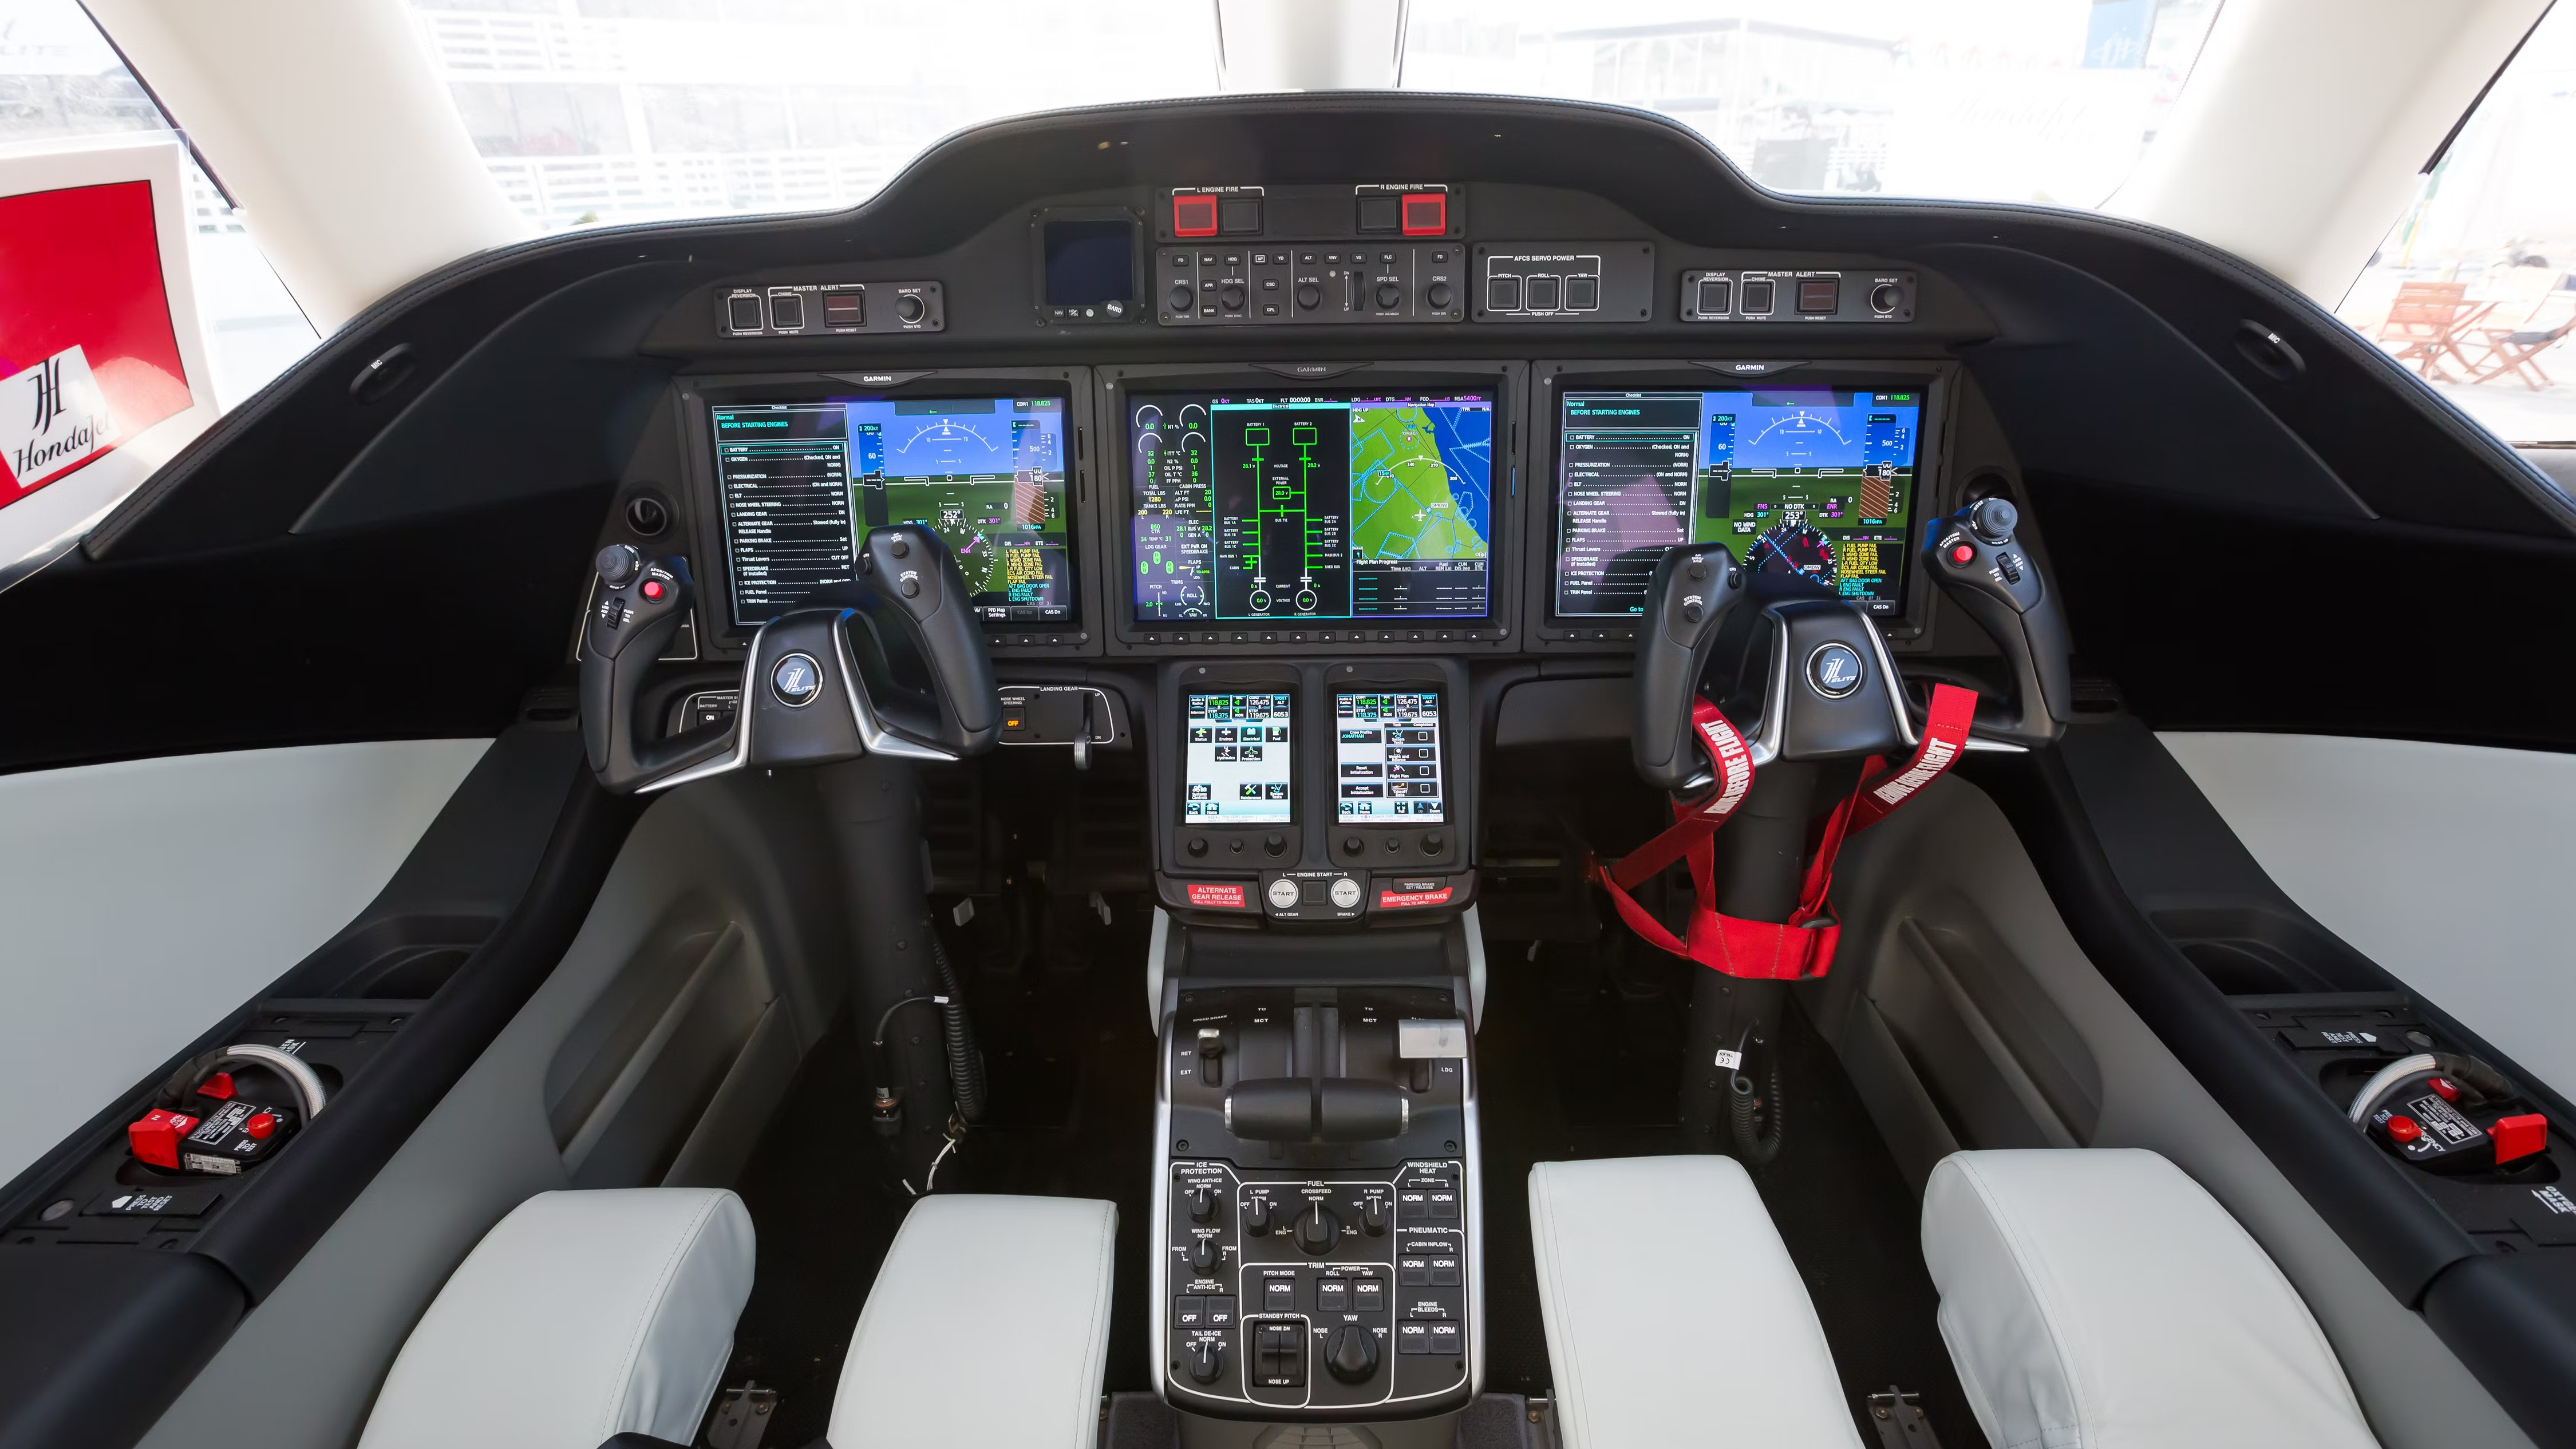 Inside the cockpit of a Hondajet.